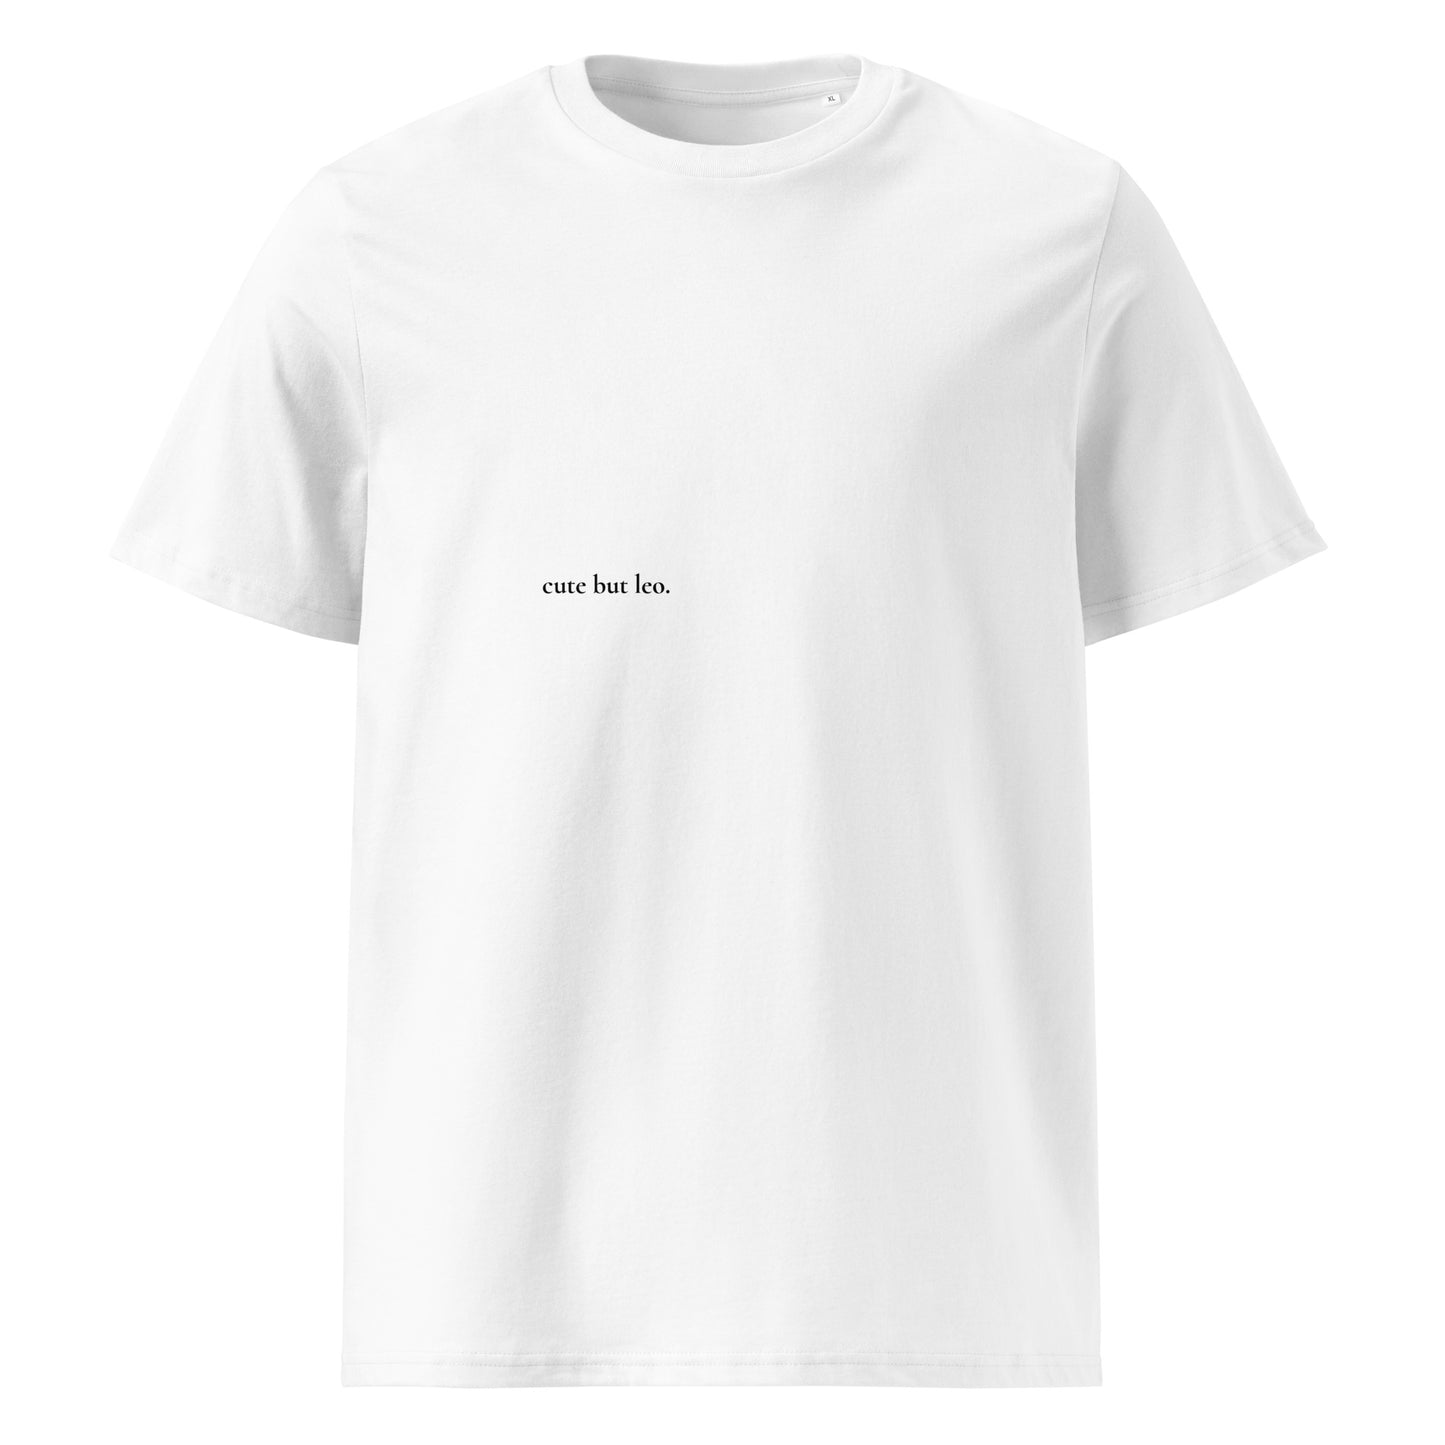 sueed. organic cotton t-shirt - cute but leo.